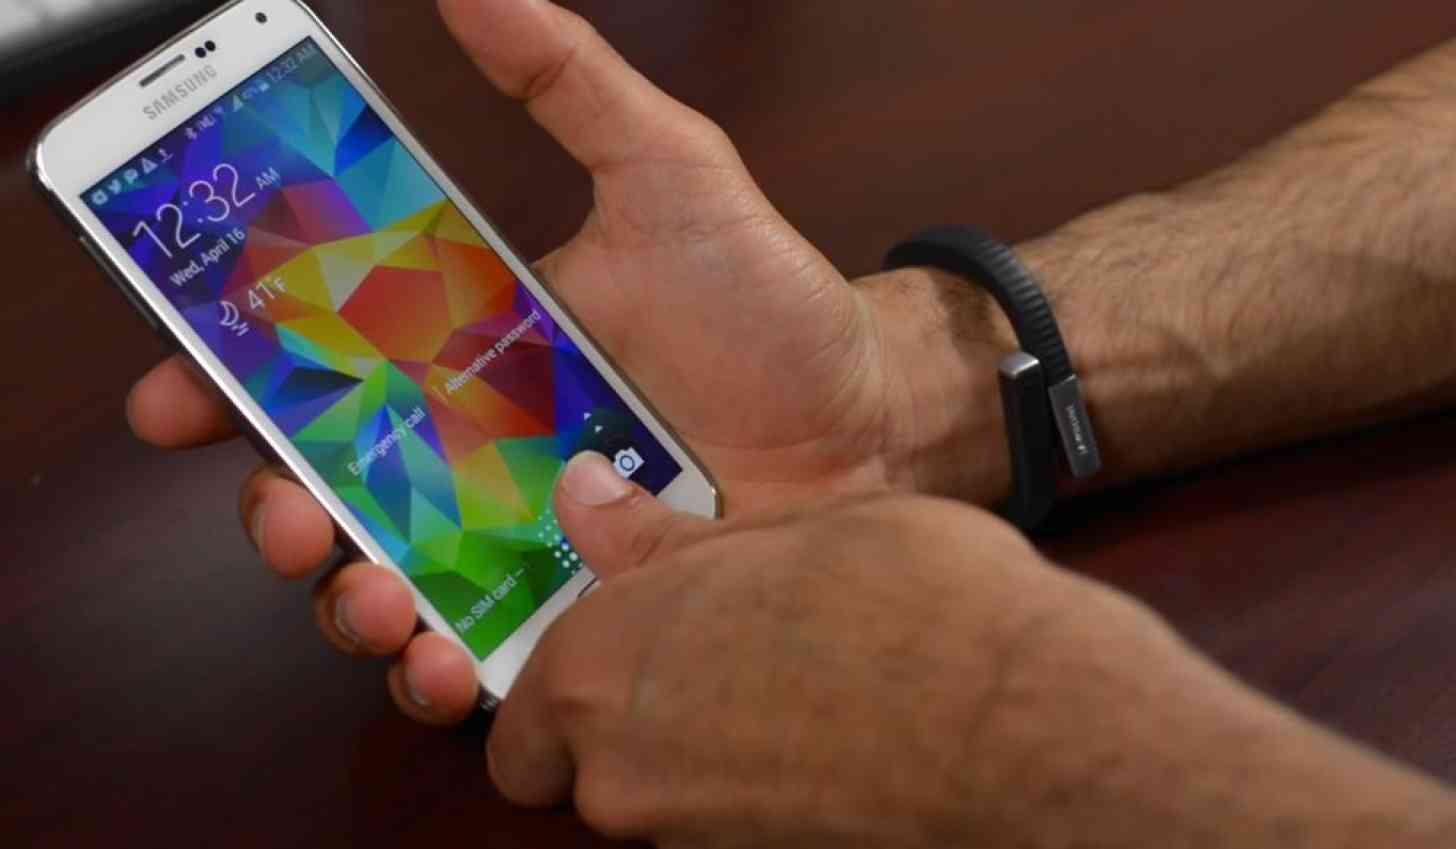 Samsung Galaxy S5 fingerprint sensor